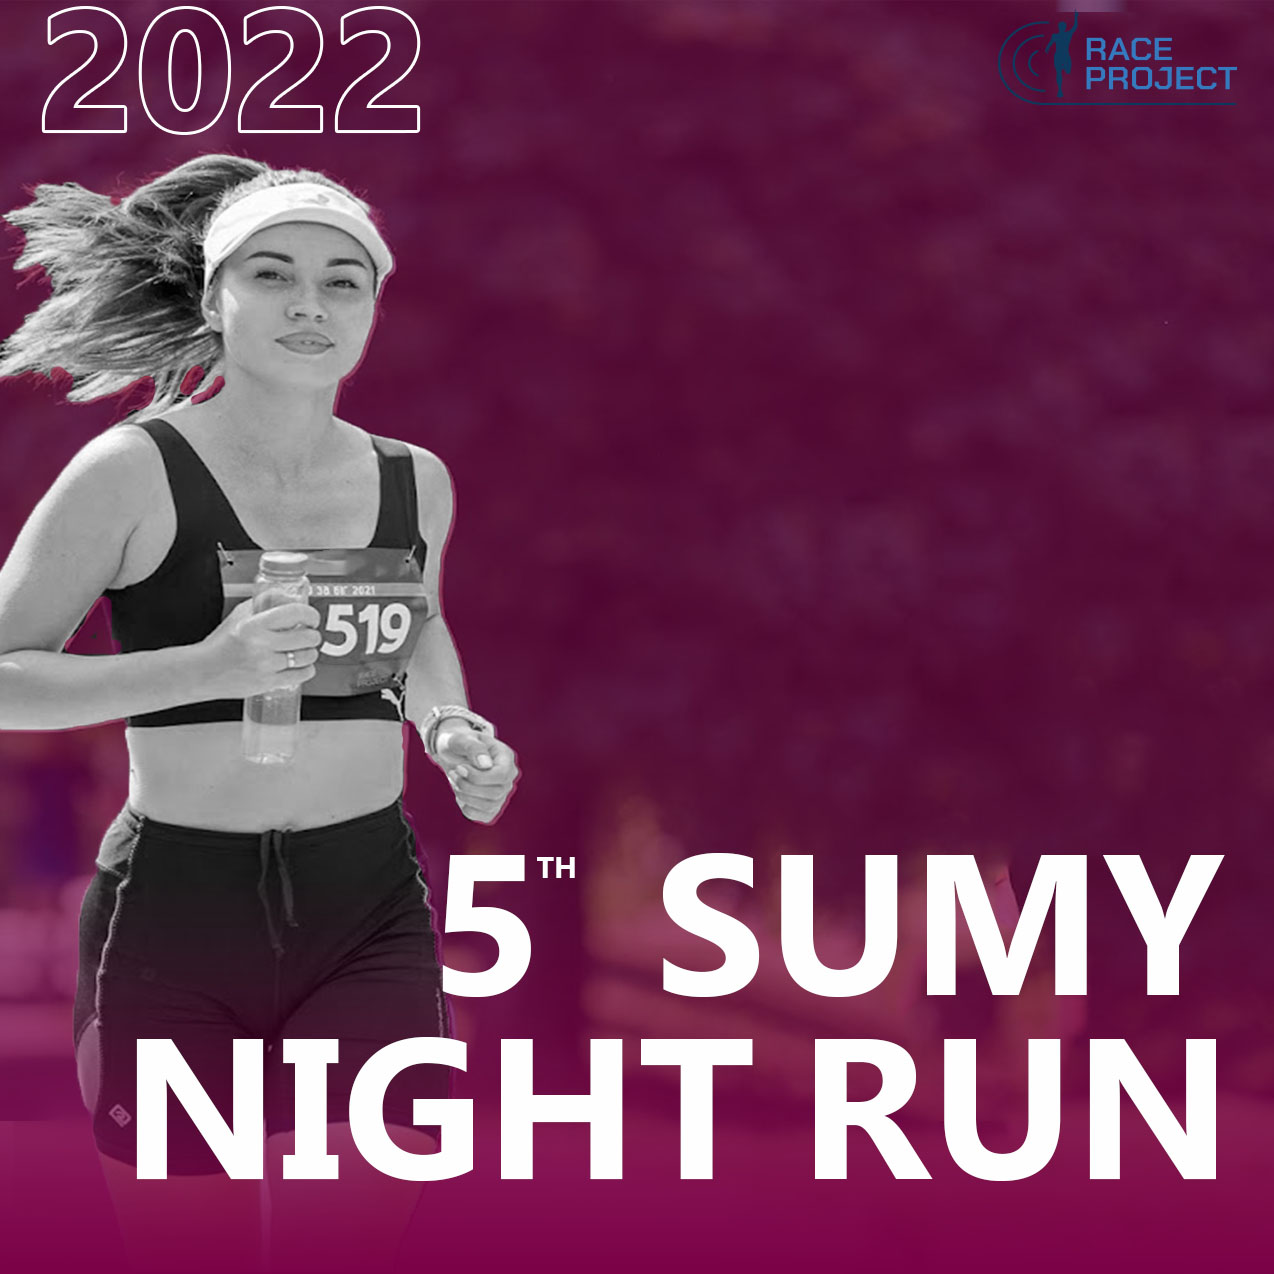 5th Sumy night run 2022